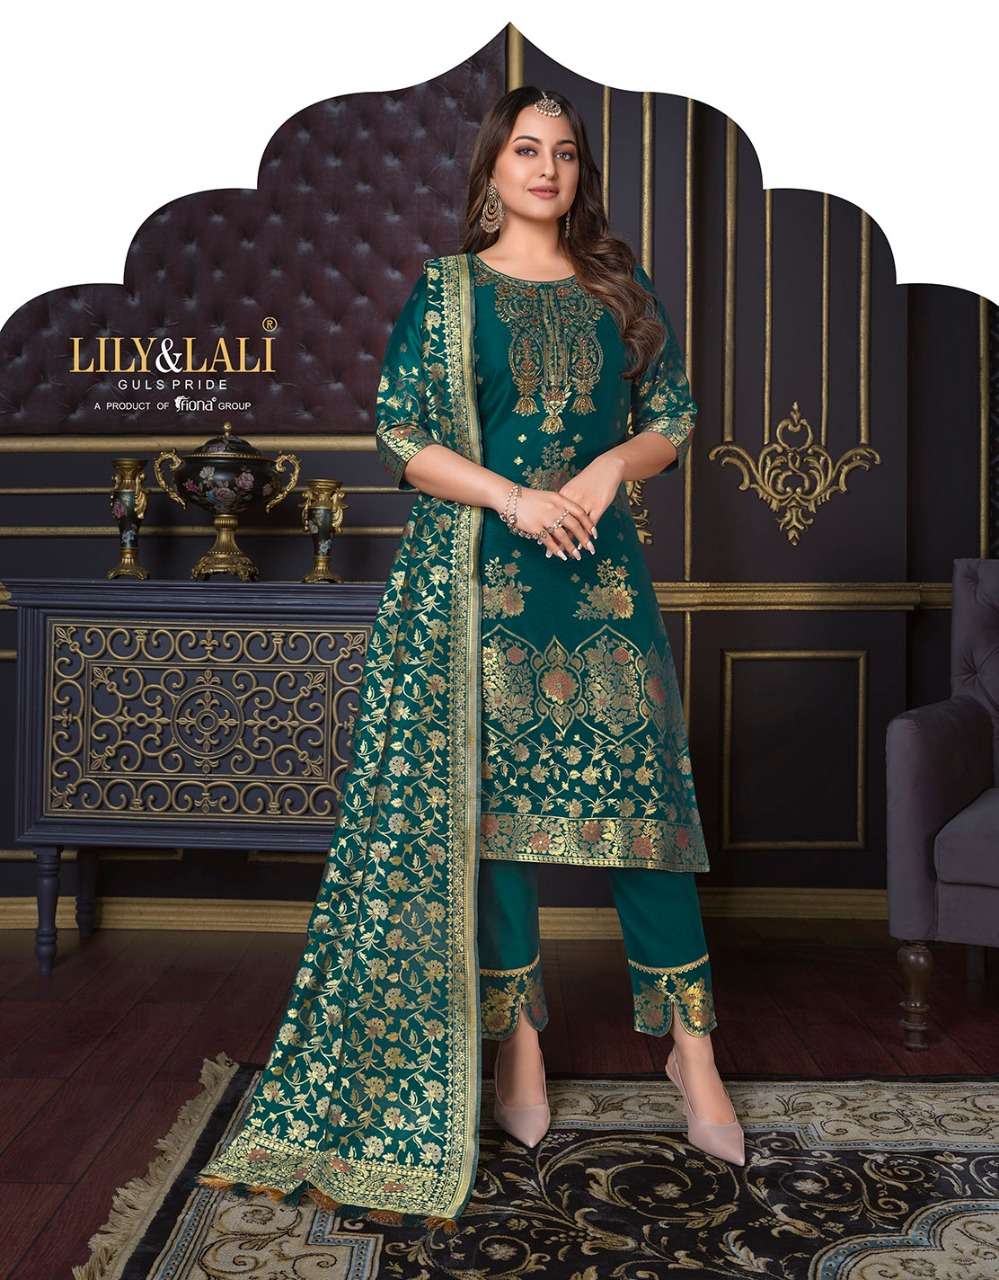 lily&lali silkkari vol-2 10121-10128 series banarsi jeqaurd ready made salwar kameez online wholesaler surat 